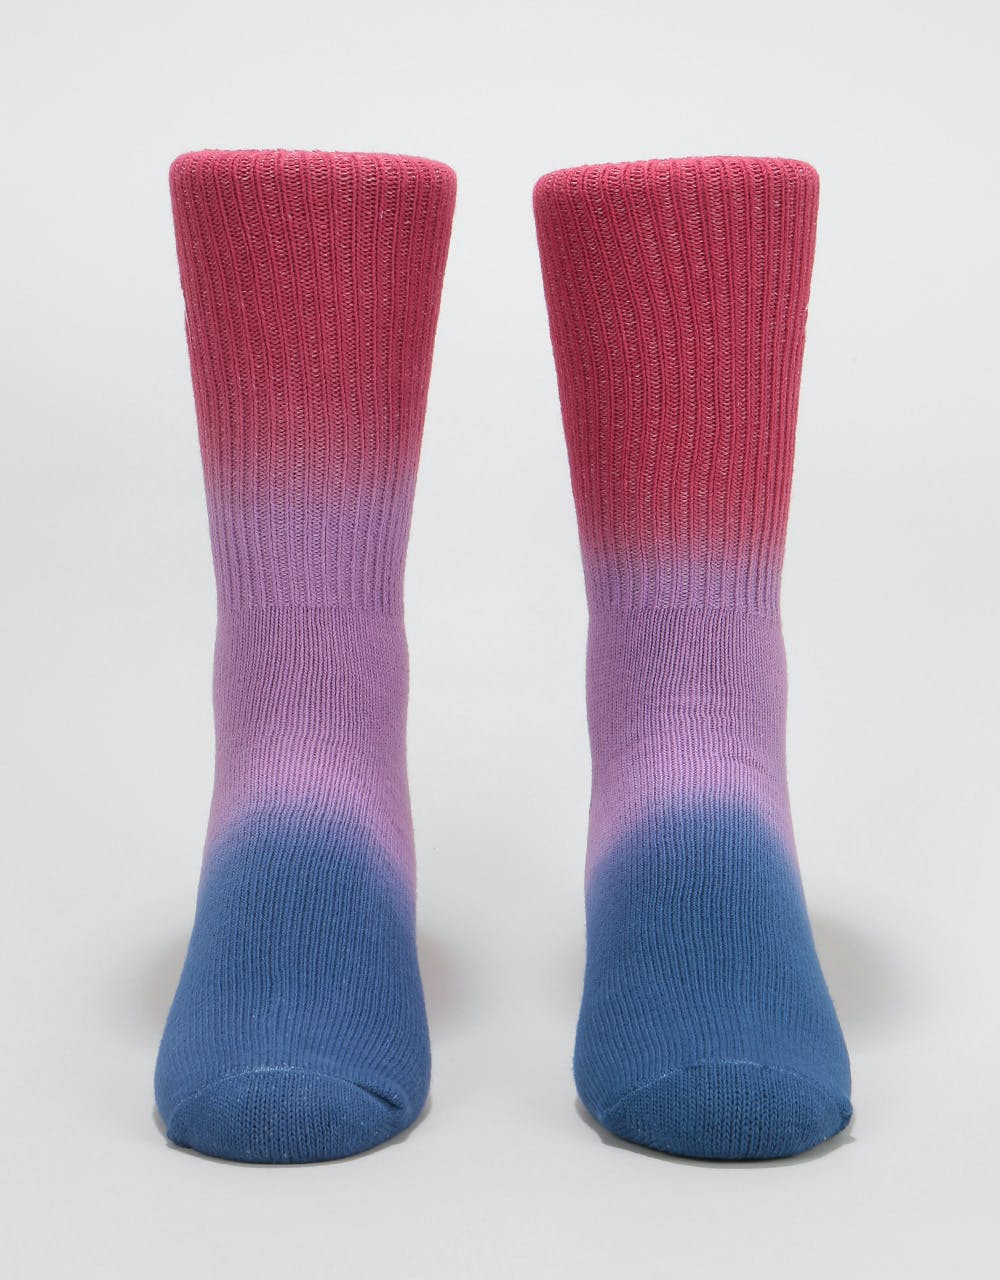 Stüssy Dip Dye Marl Socks - Red